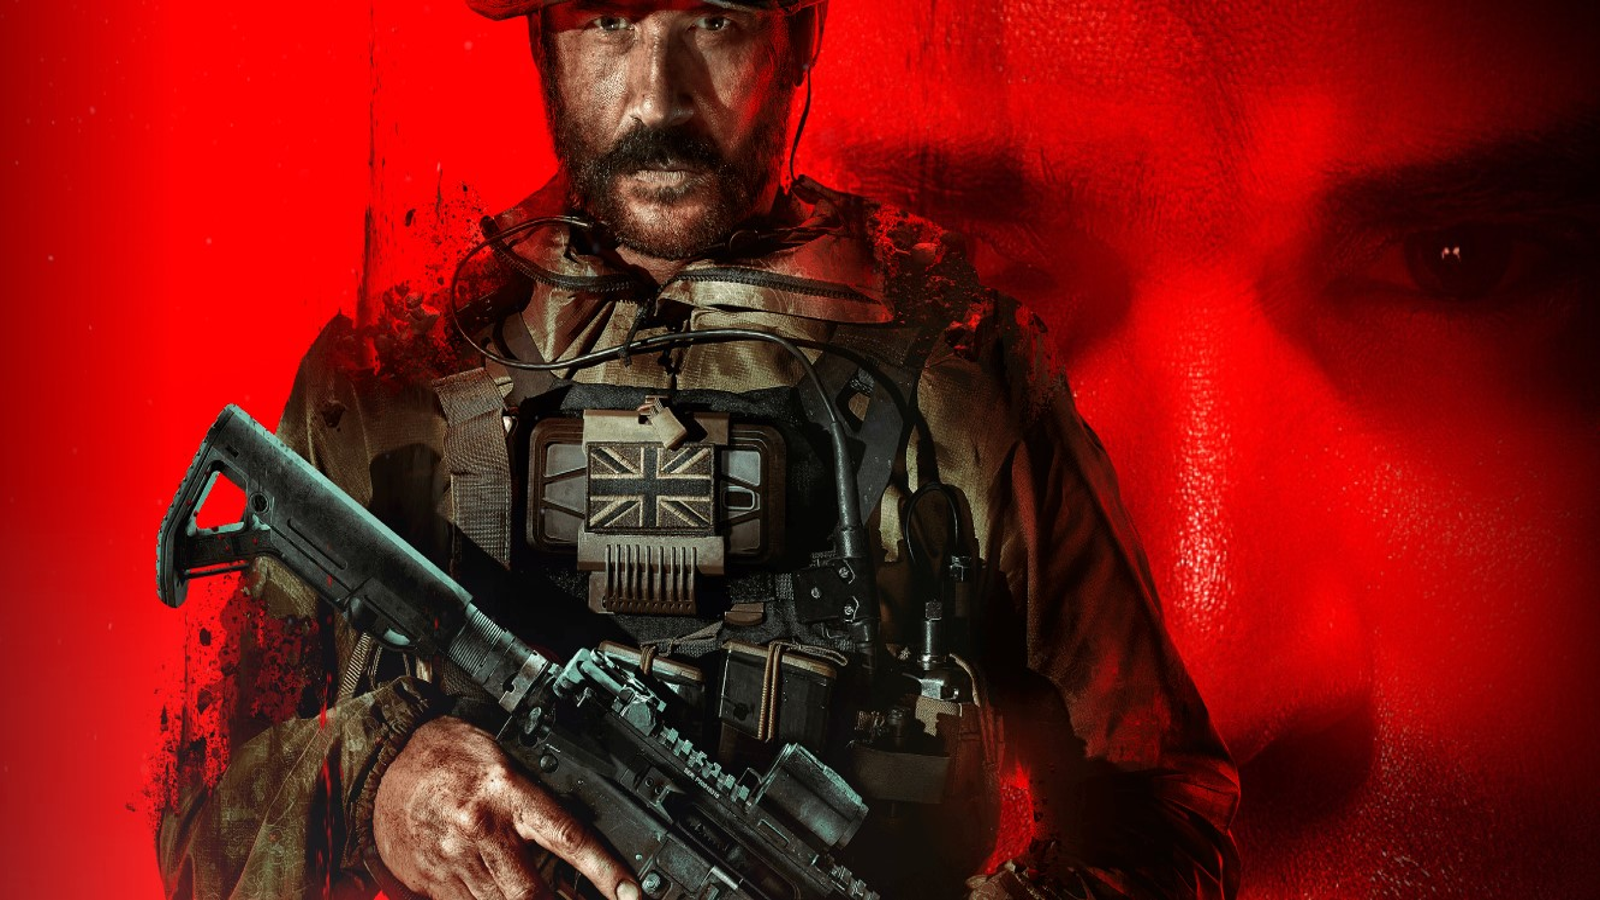 Call of Duty Modern Warfare III Gameplay Trailer